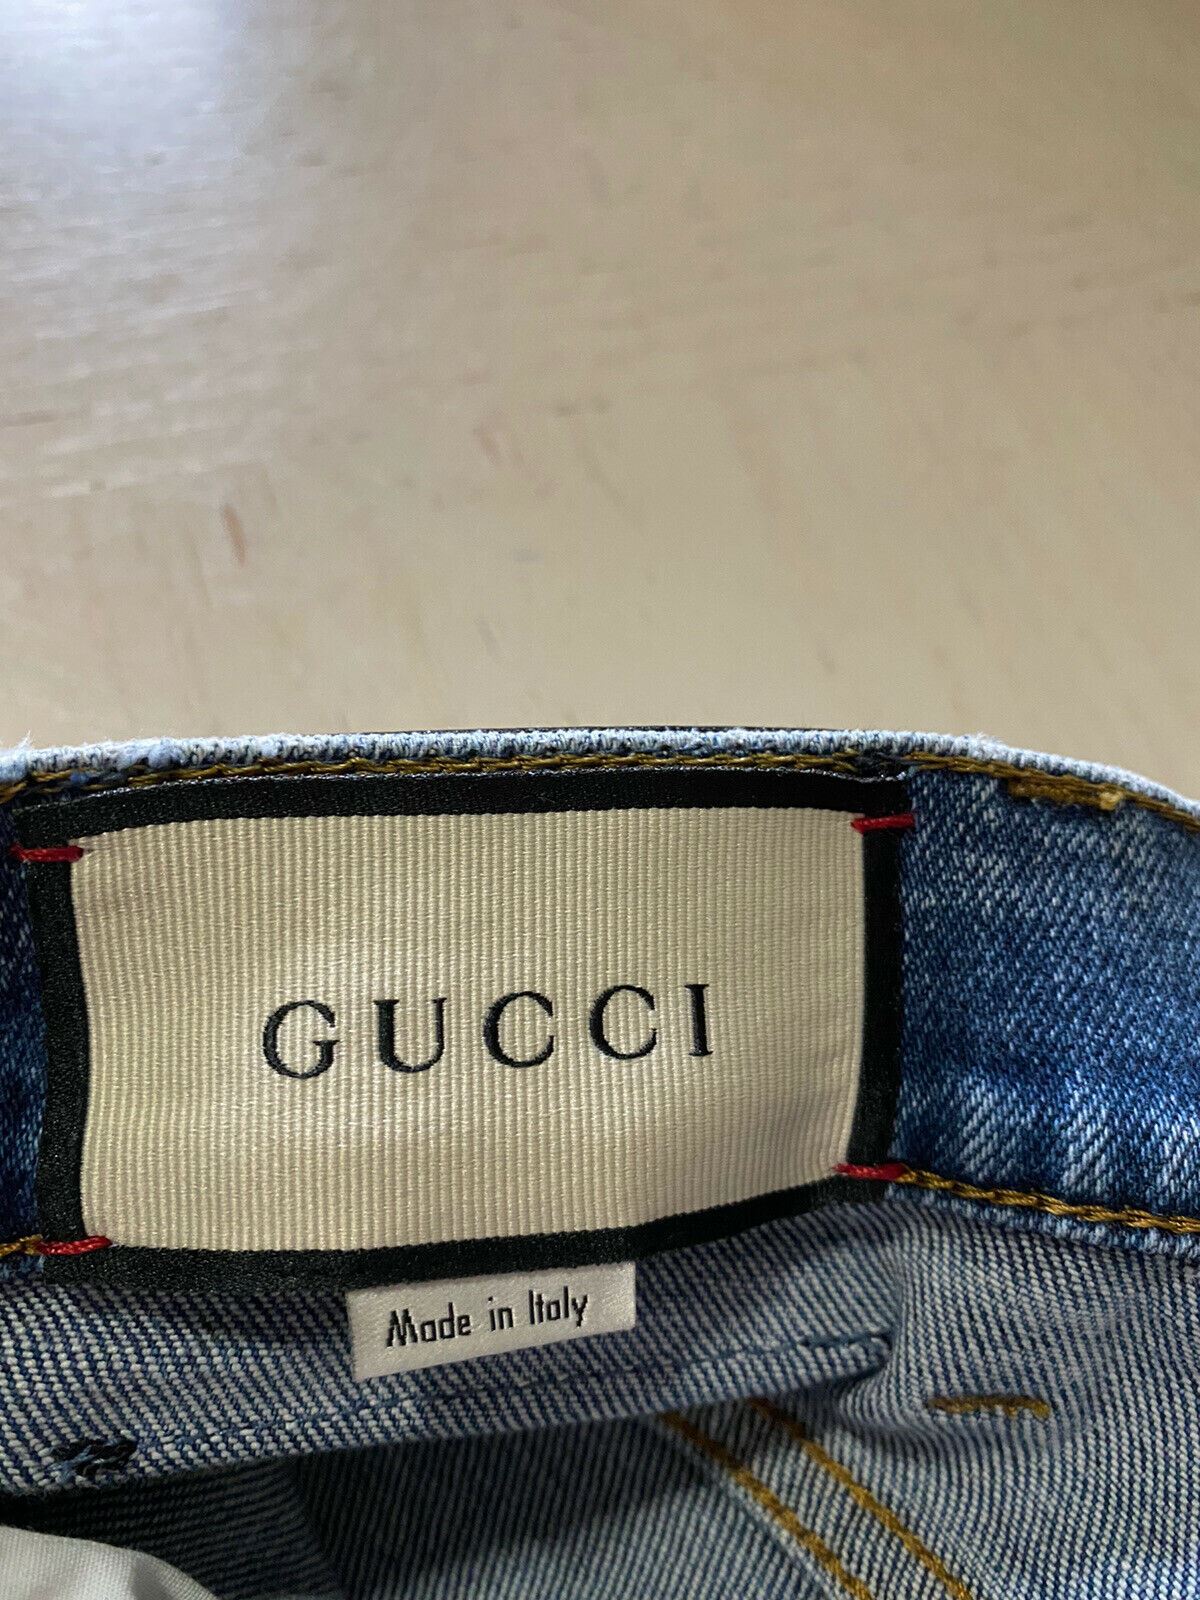 Neu mit Etikett: 1200 $ Gucci Herrenjeanshose Slim Fit Blau 36 US (52 Euro) Italien